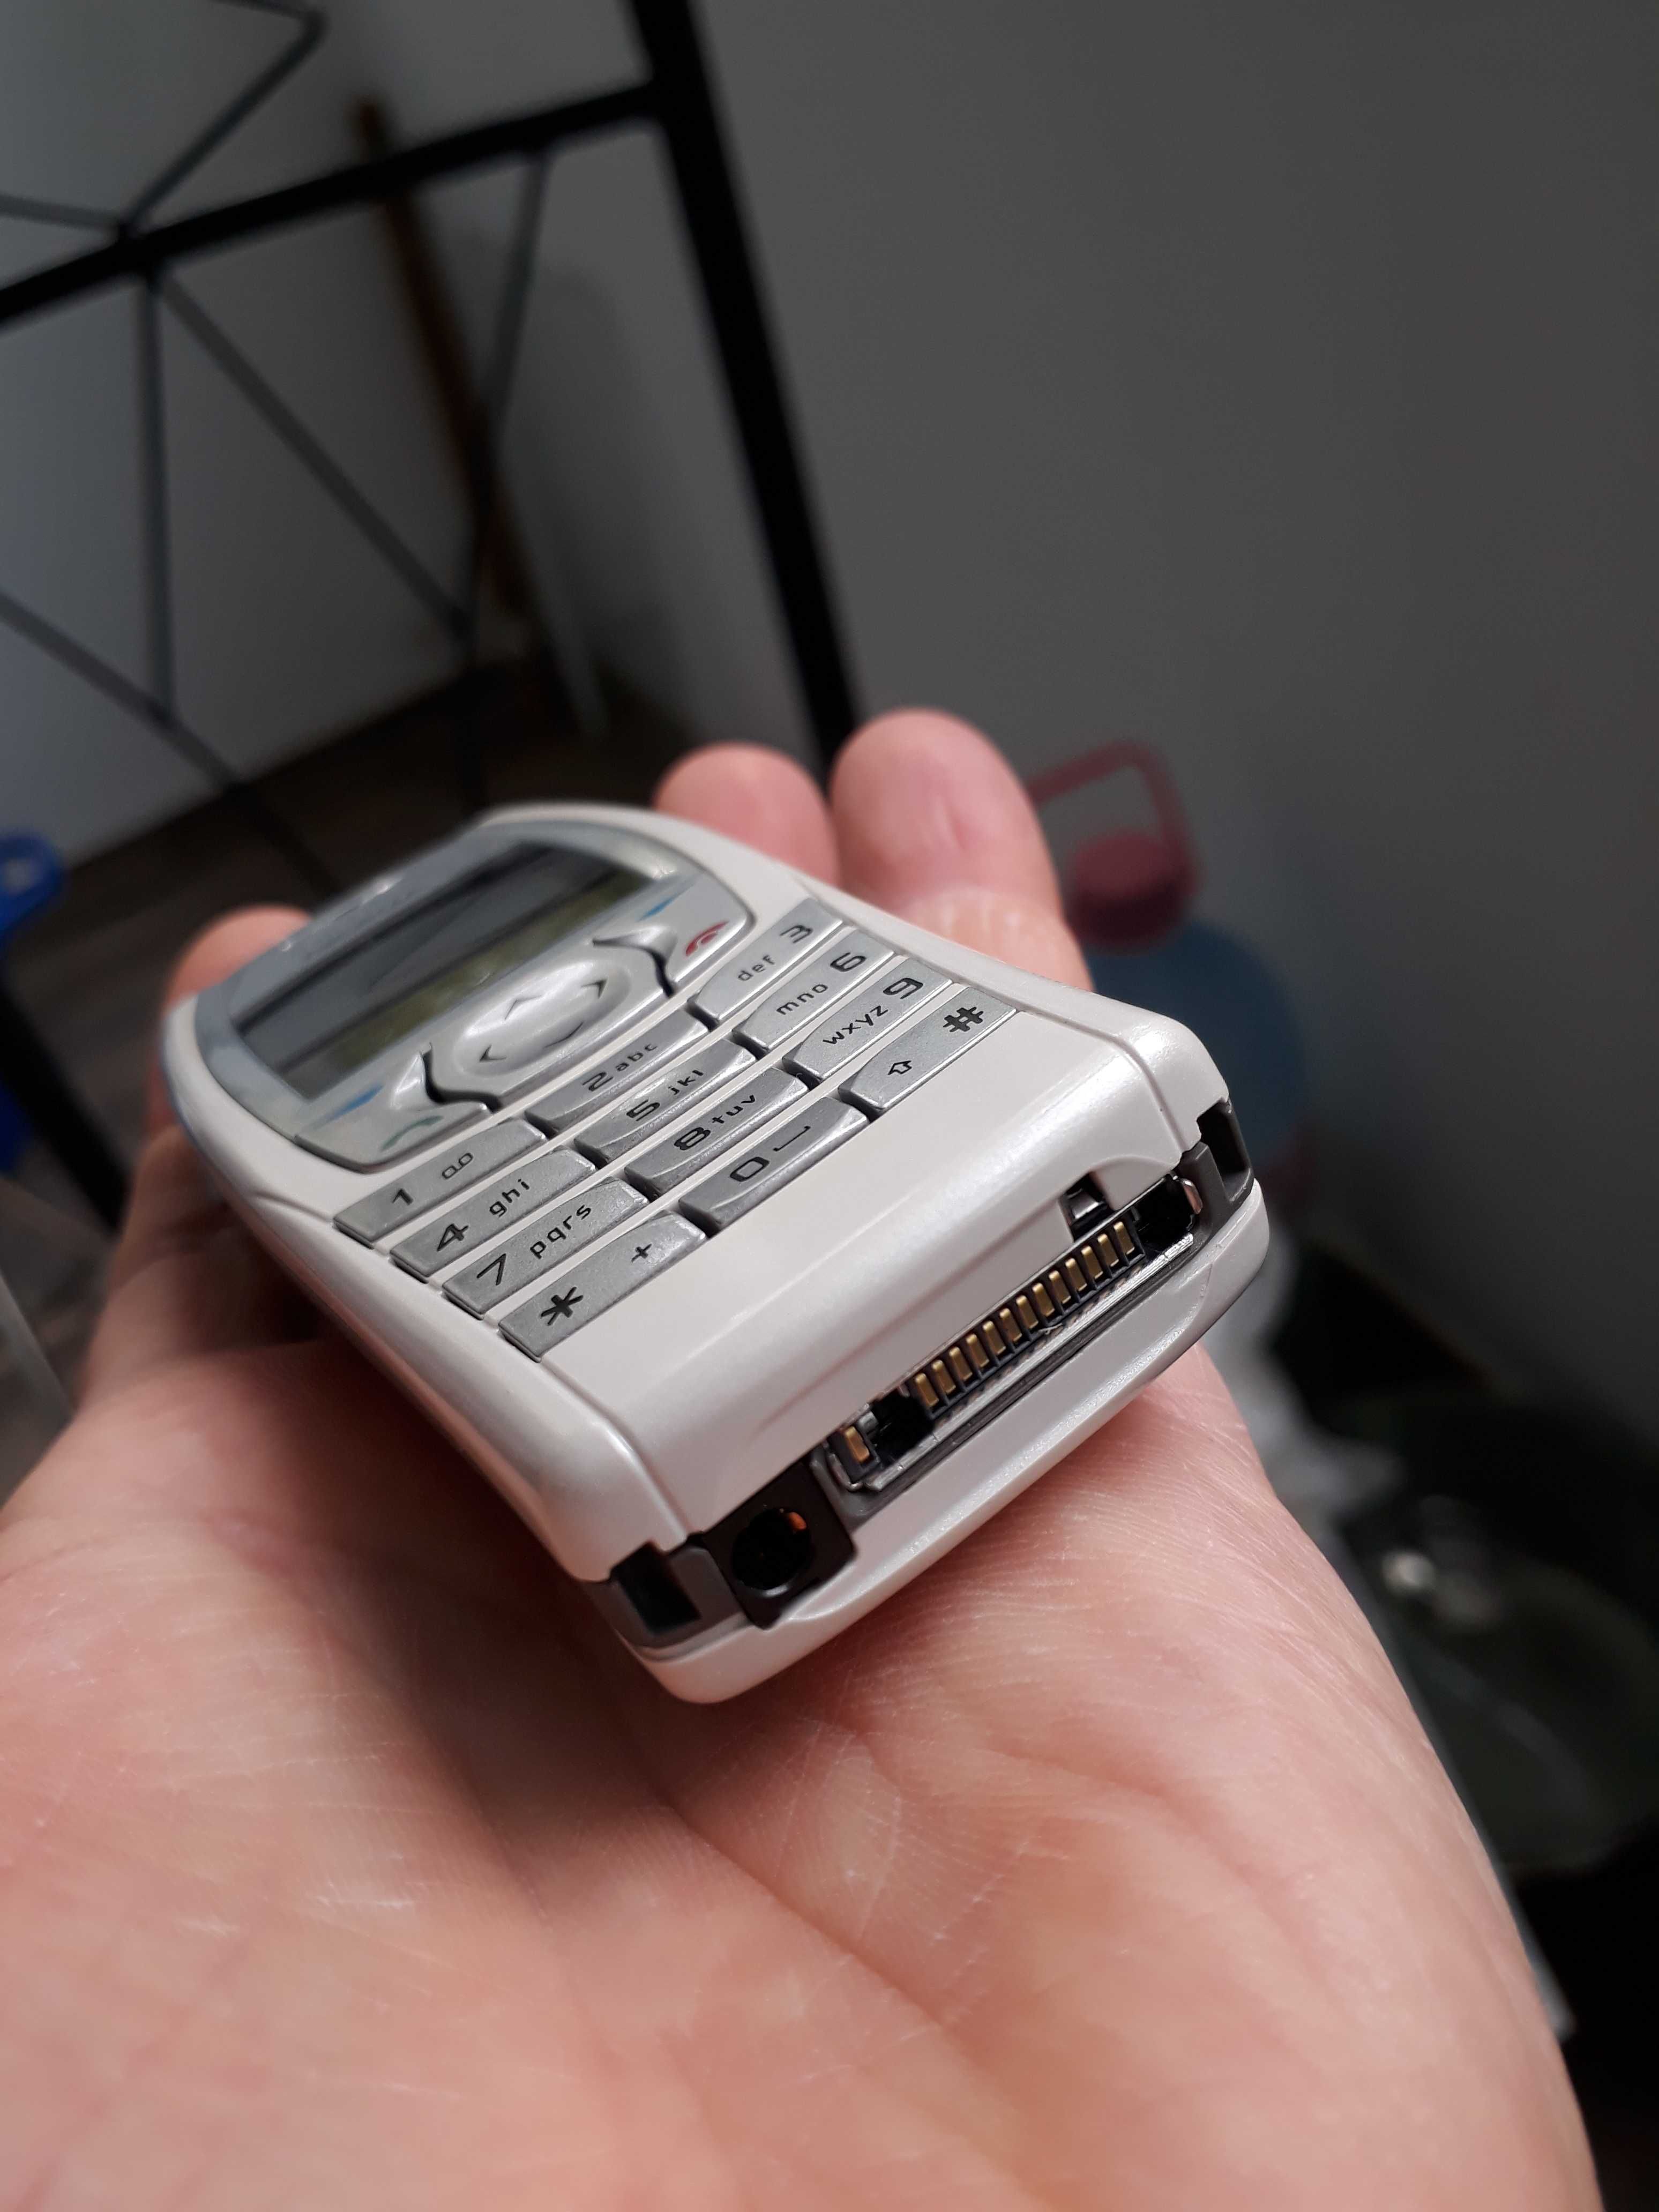 Nokia 6610 original Finlanda necodat impecabil ca nou pt colectie